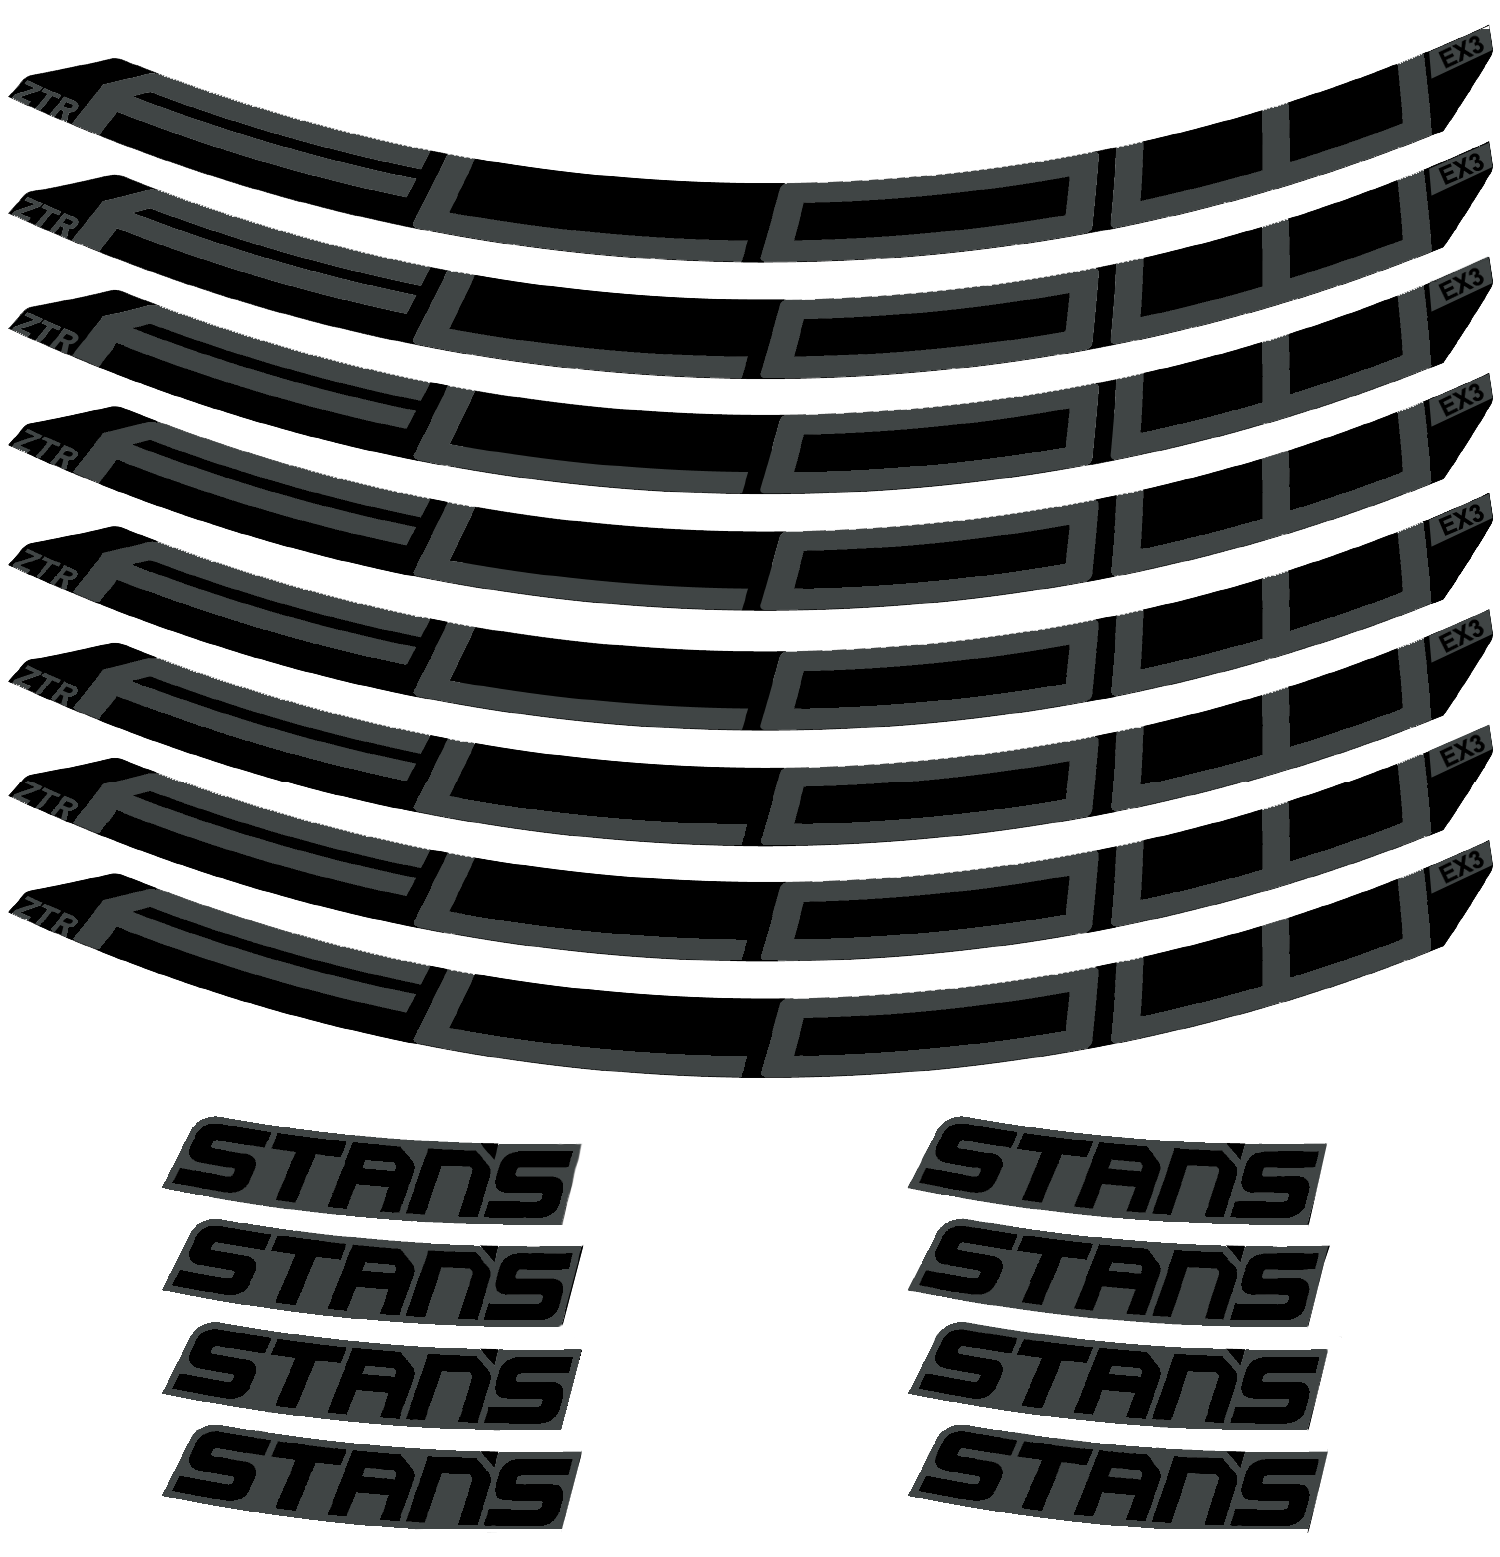 Sticker Set – Floyd GmbH